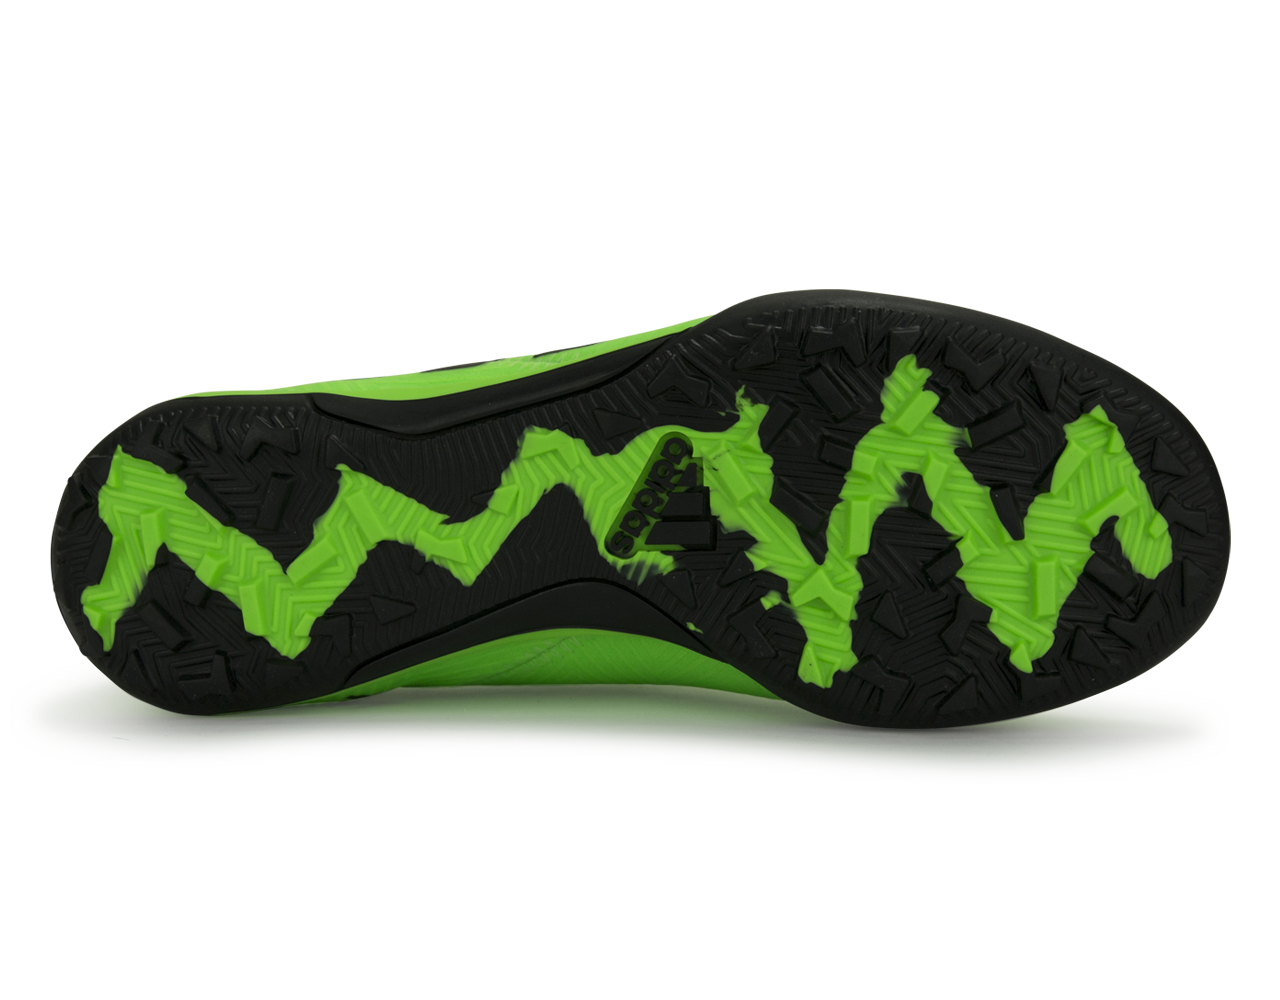 adidas Kids Nemeziz Messi Tango Turf Soccer Shoes  Solar Green/Core Black